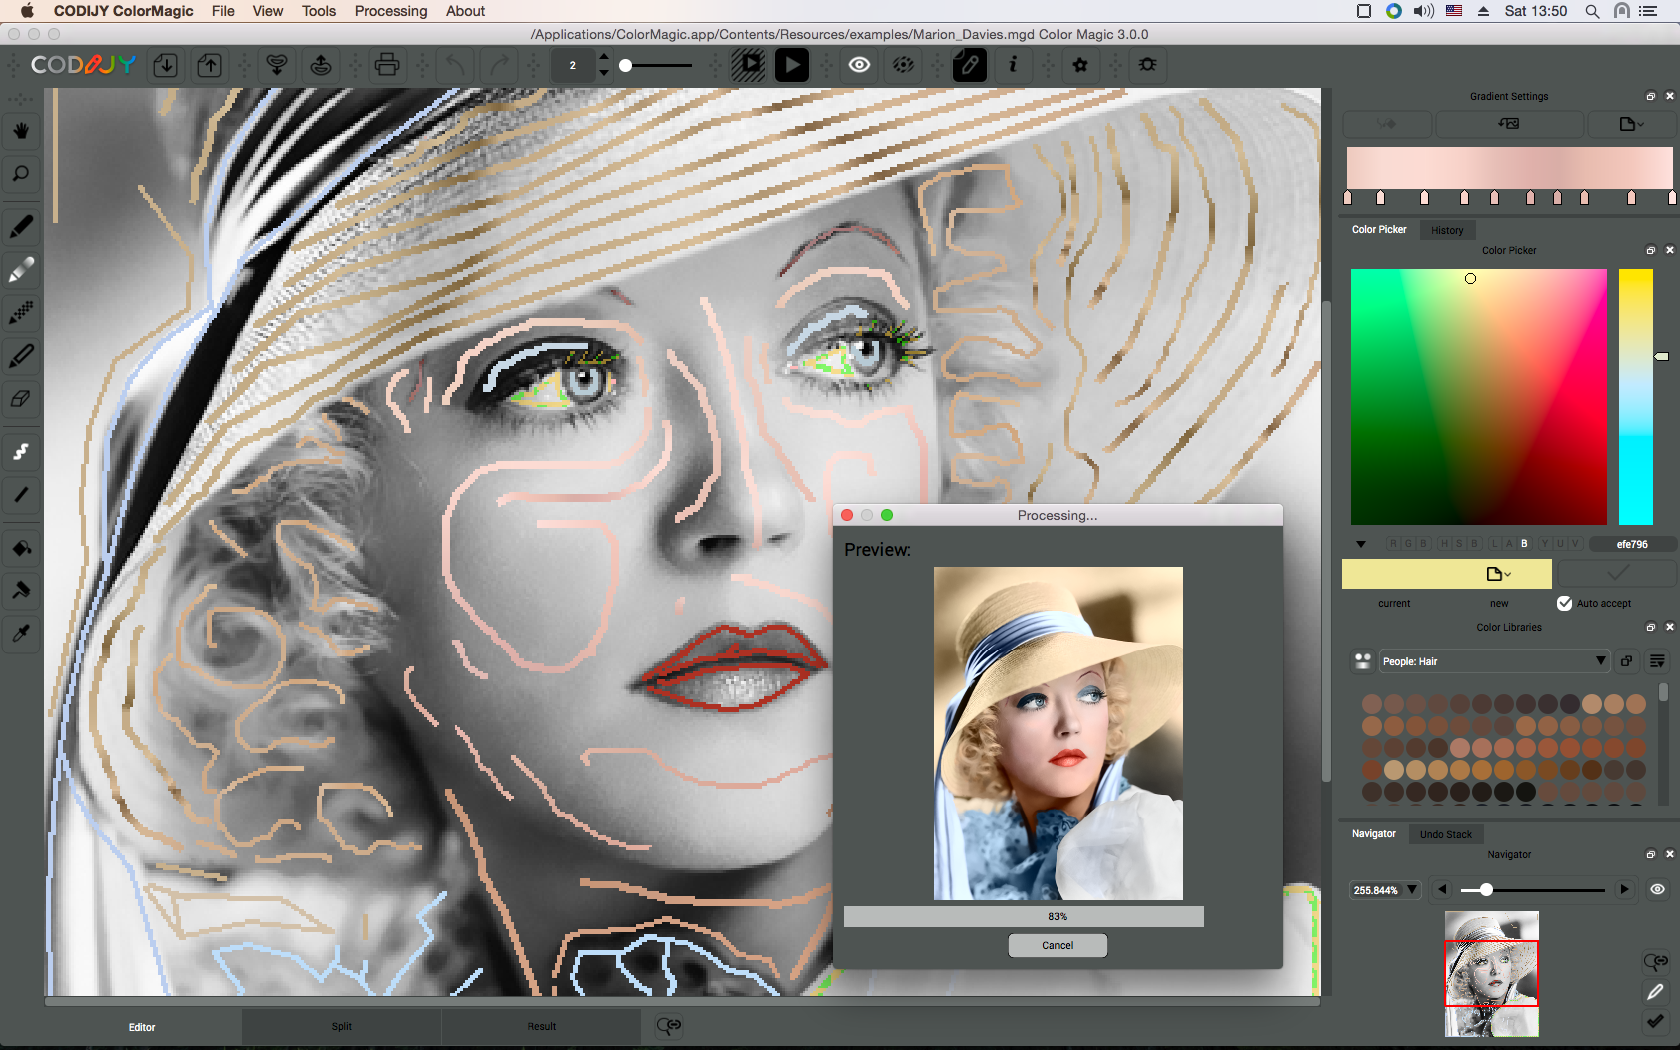 portrait professional download for mac